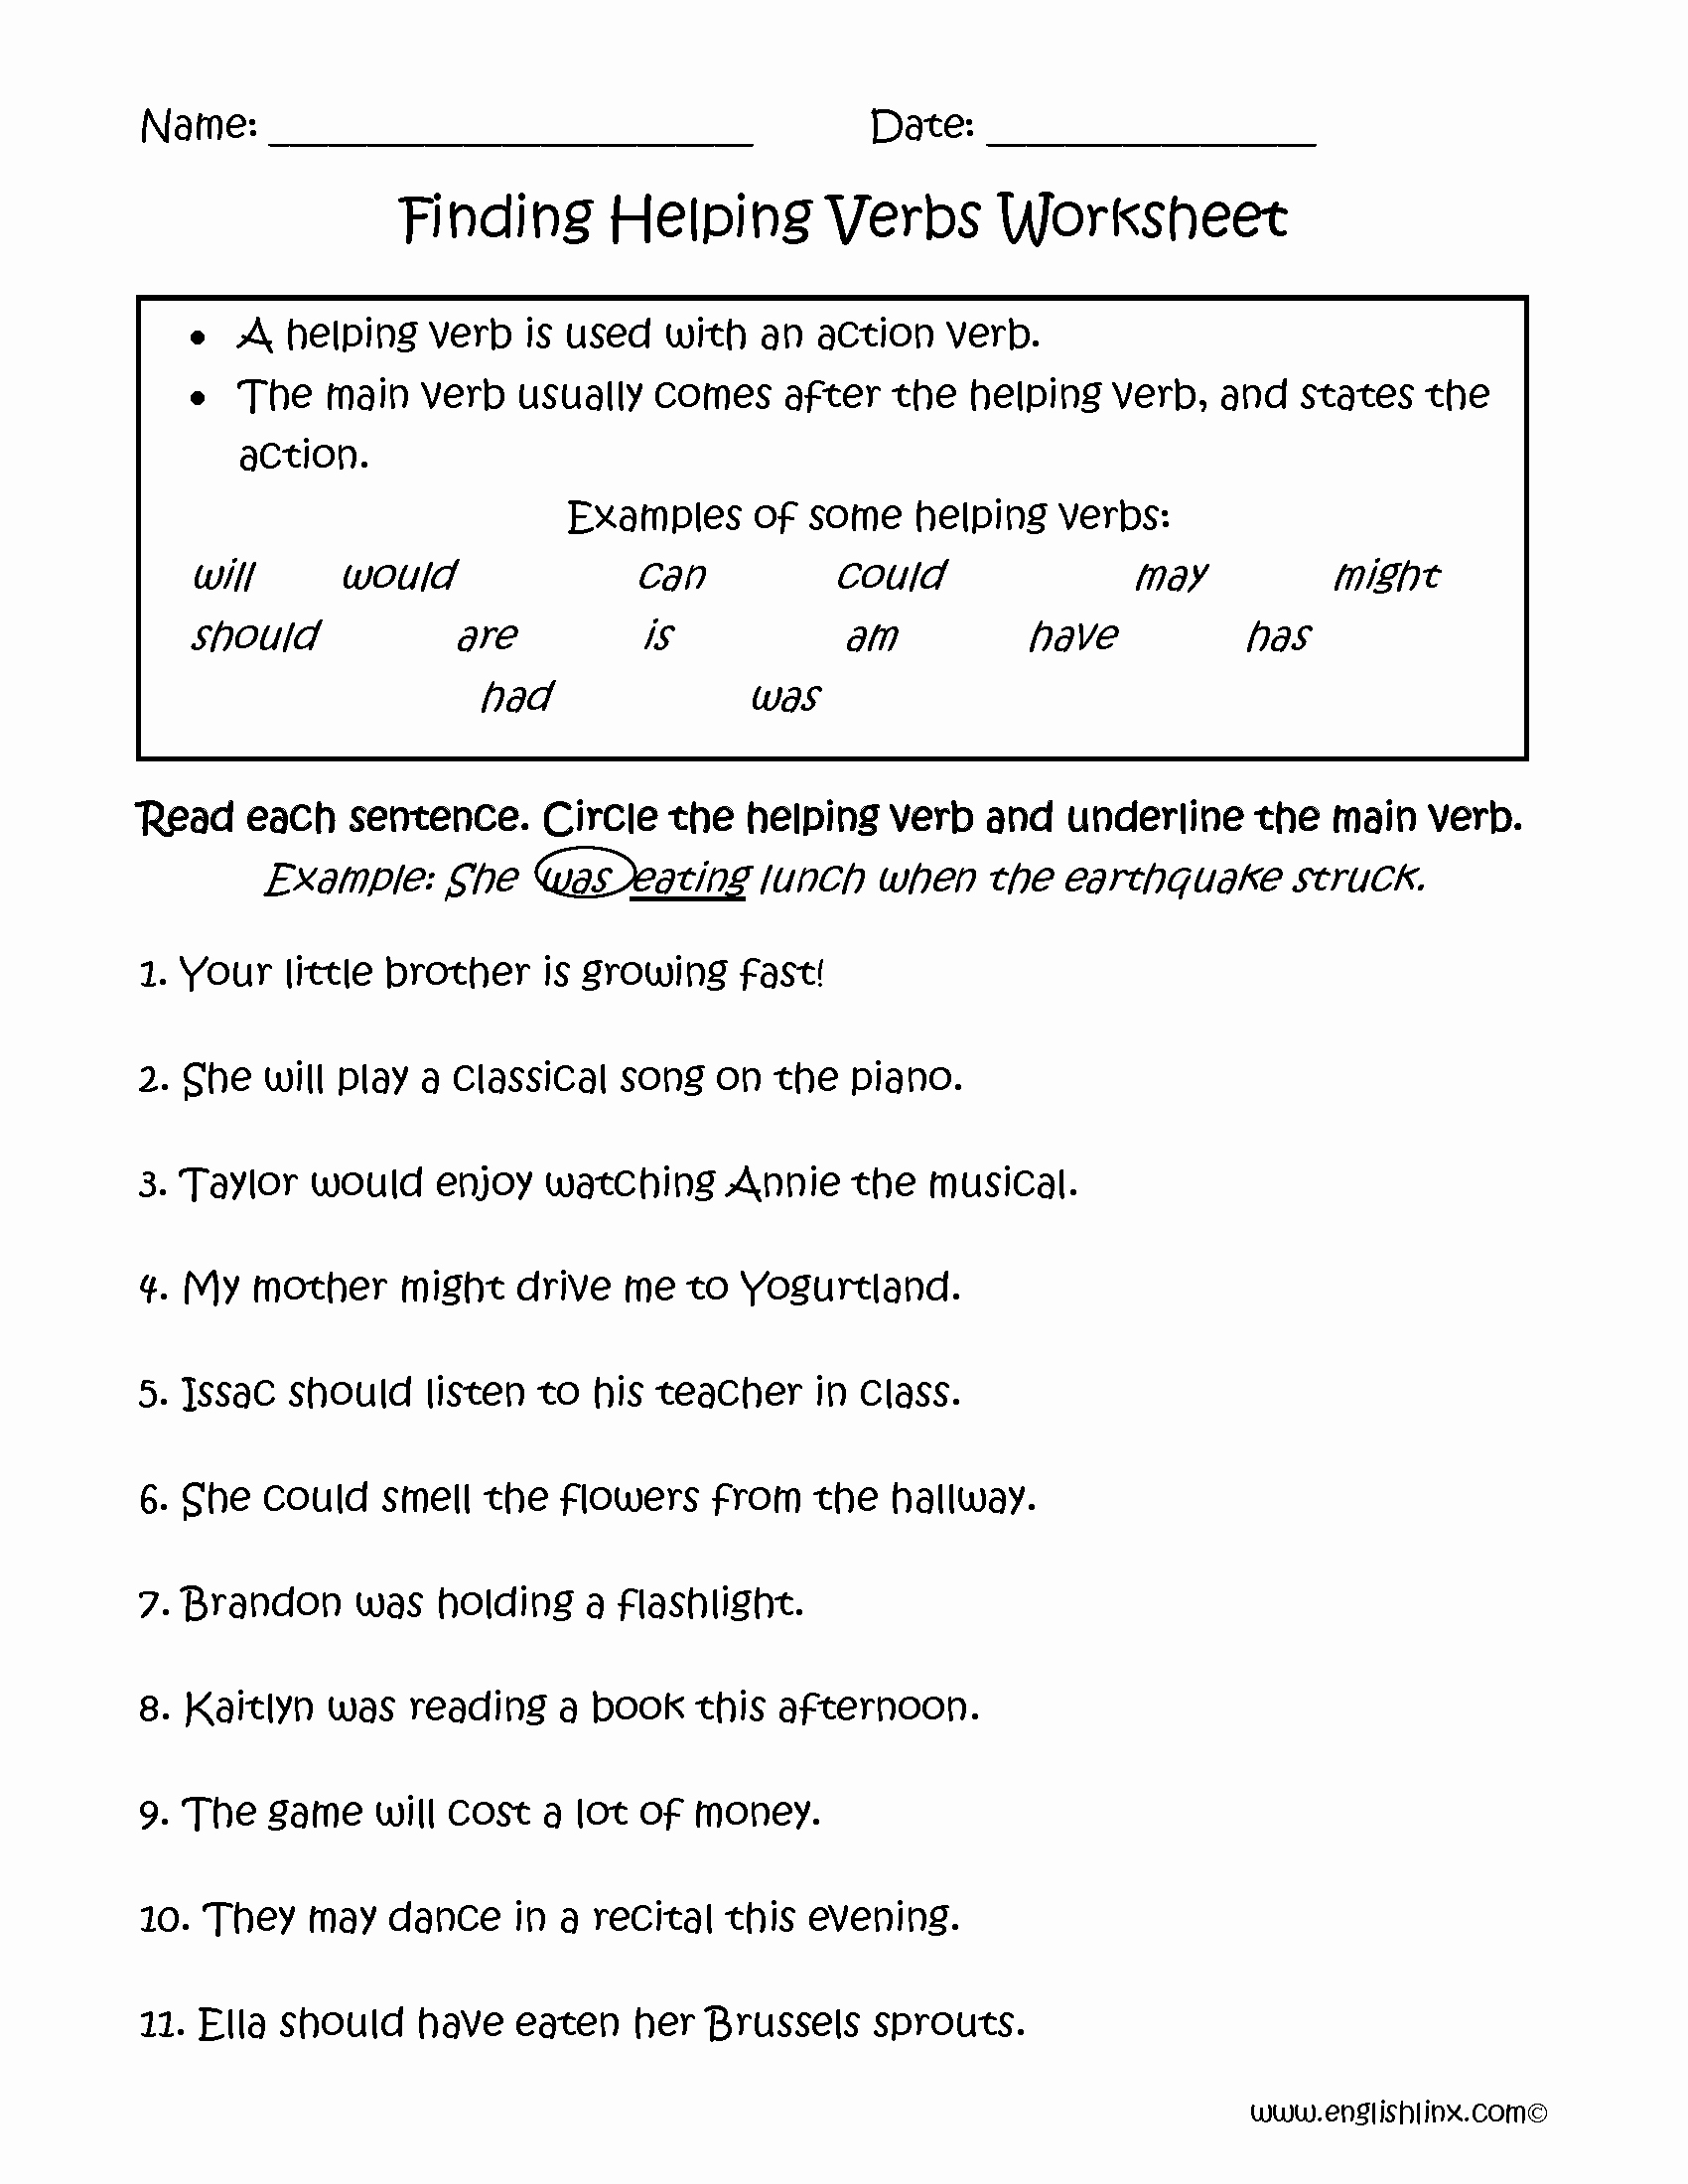 Linking and Helping Verbs Worksheet New Verbs Worksheets